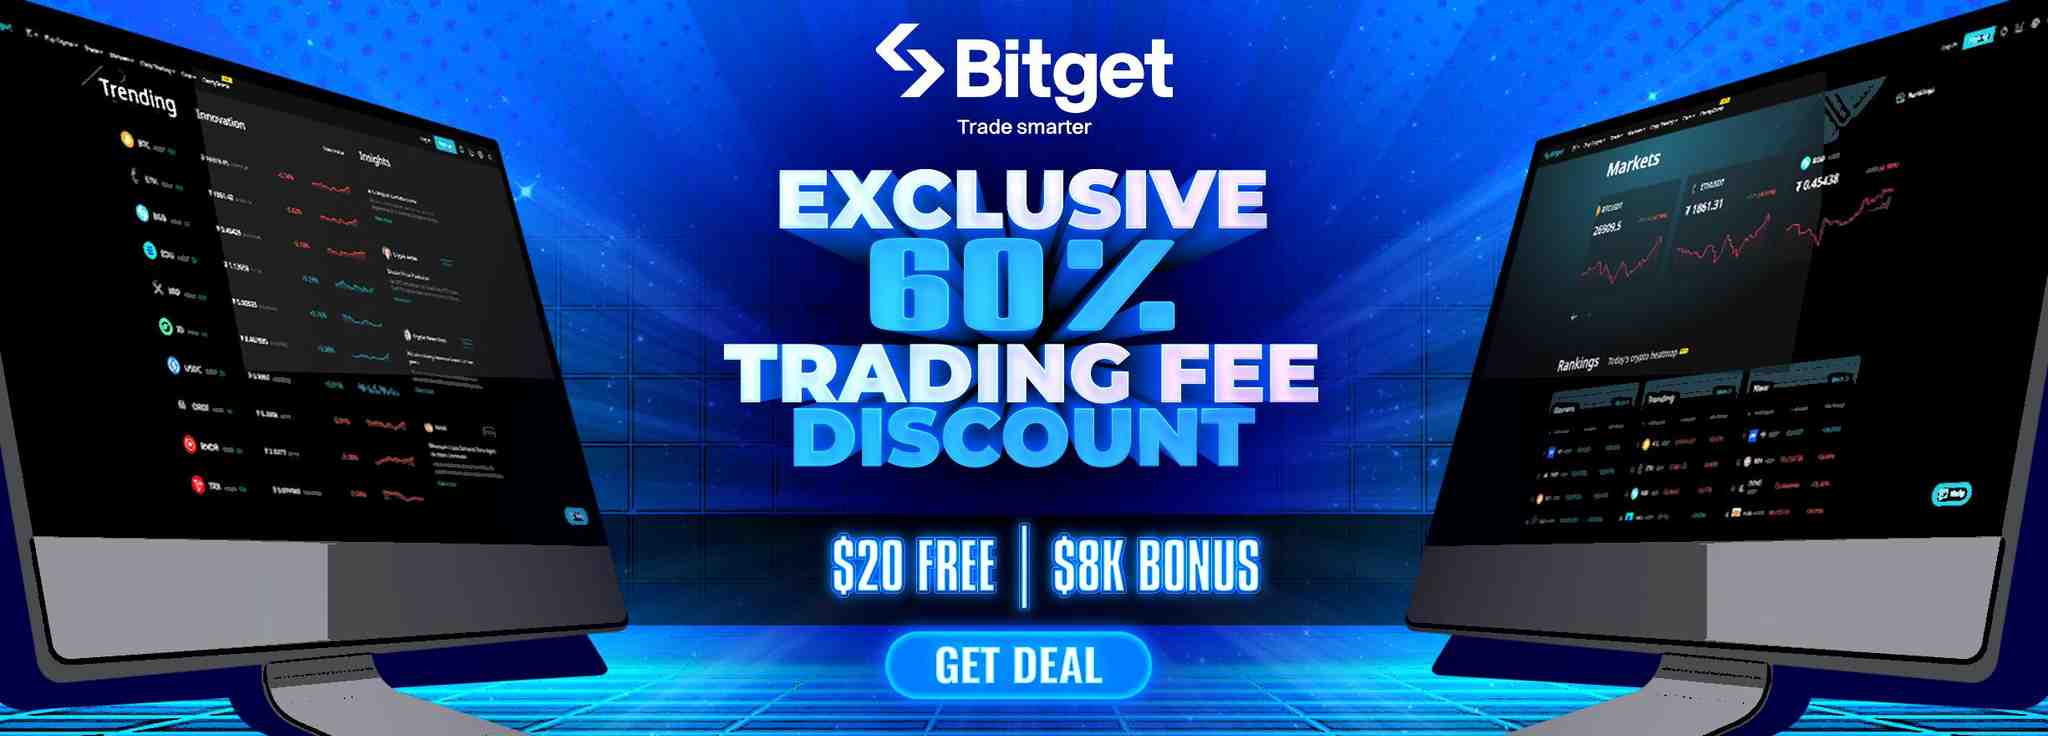 Bitget-Deals-CTA.jpg